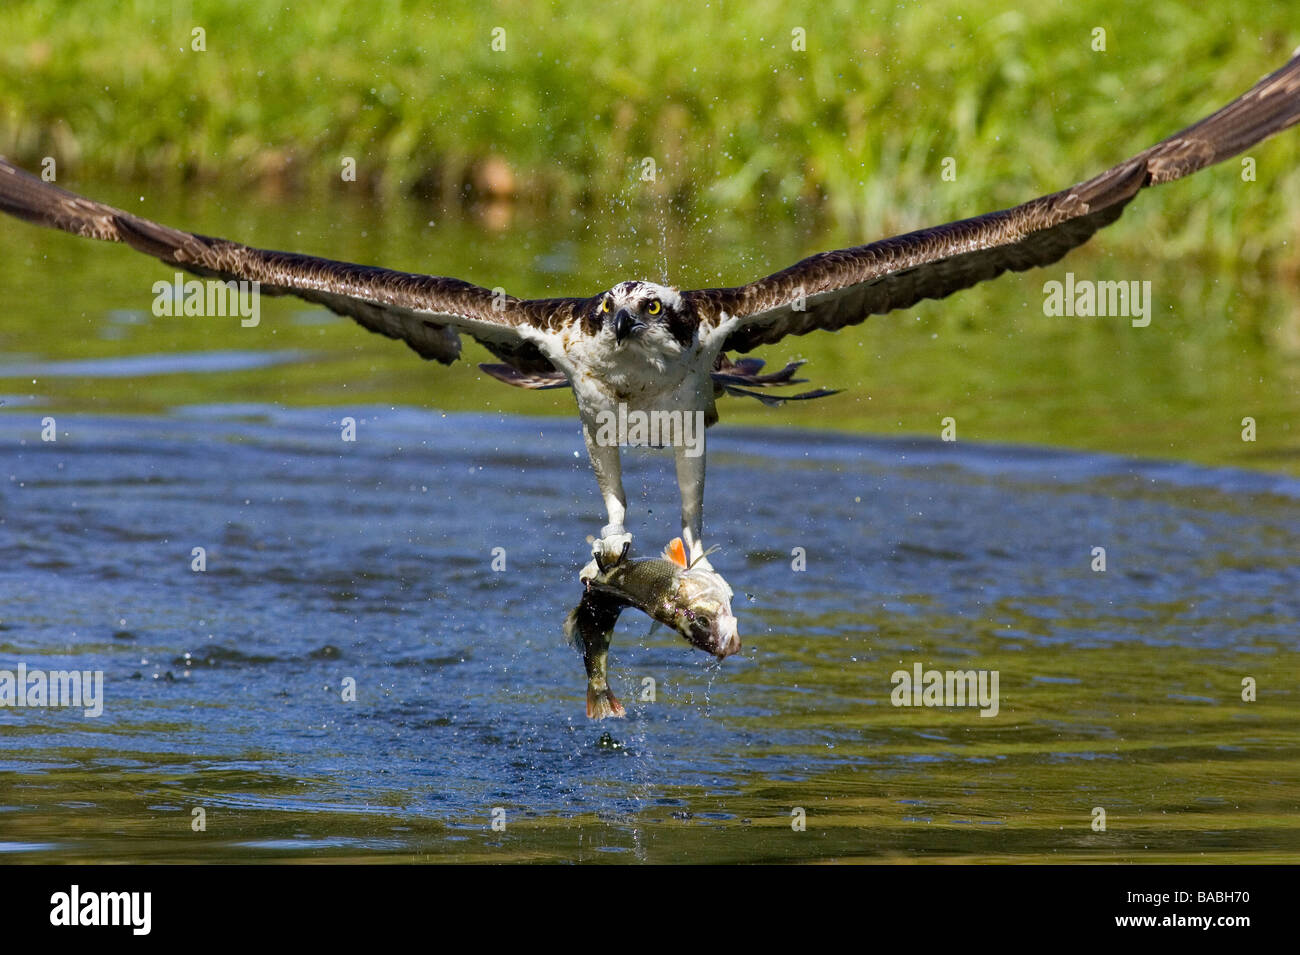 Fish hawk catching fish Stock Photo - Alamy